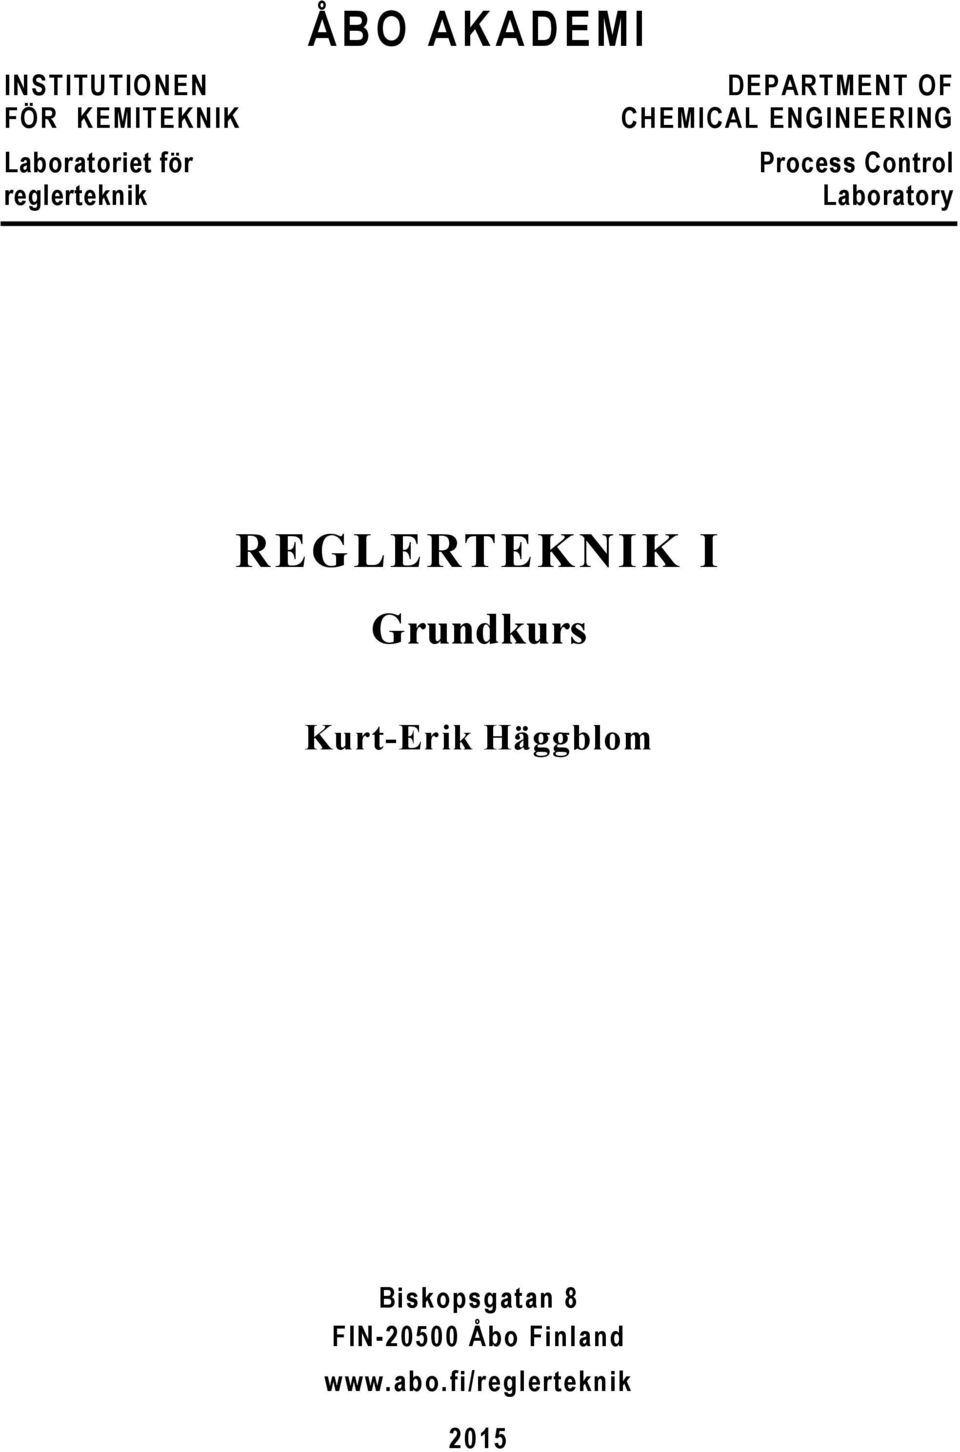 Control Laboratory REGLERTEKNIK I Grundkurs Kurt-Erik